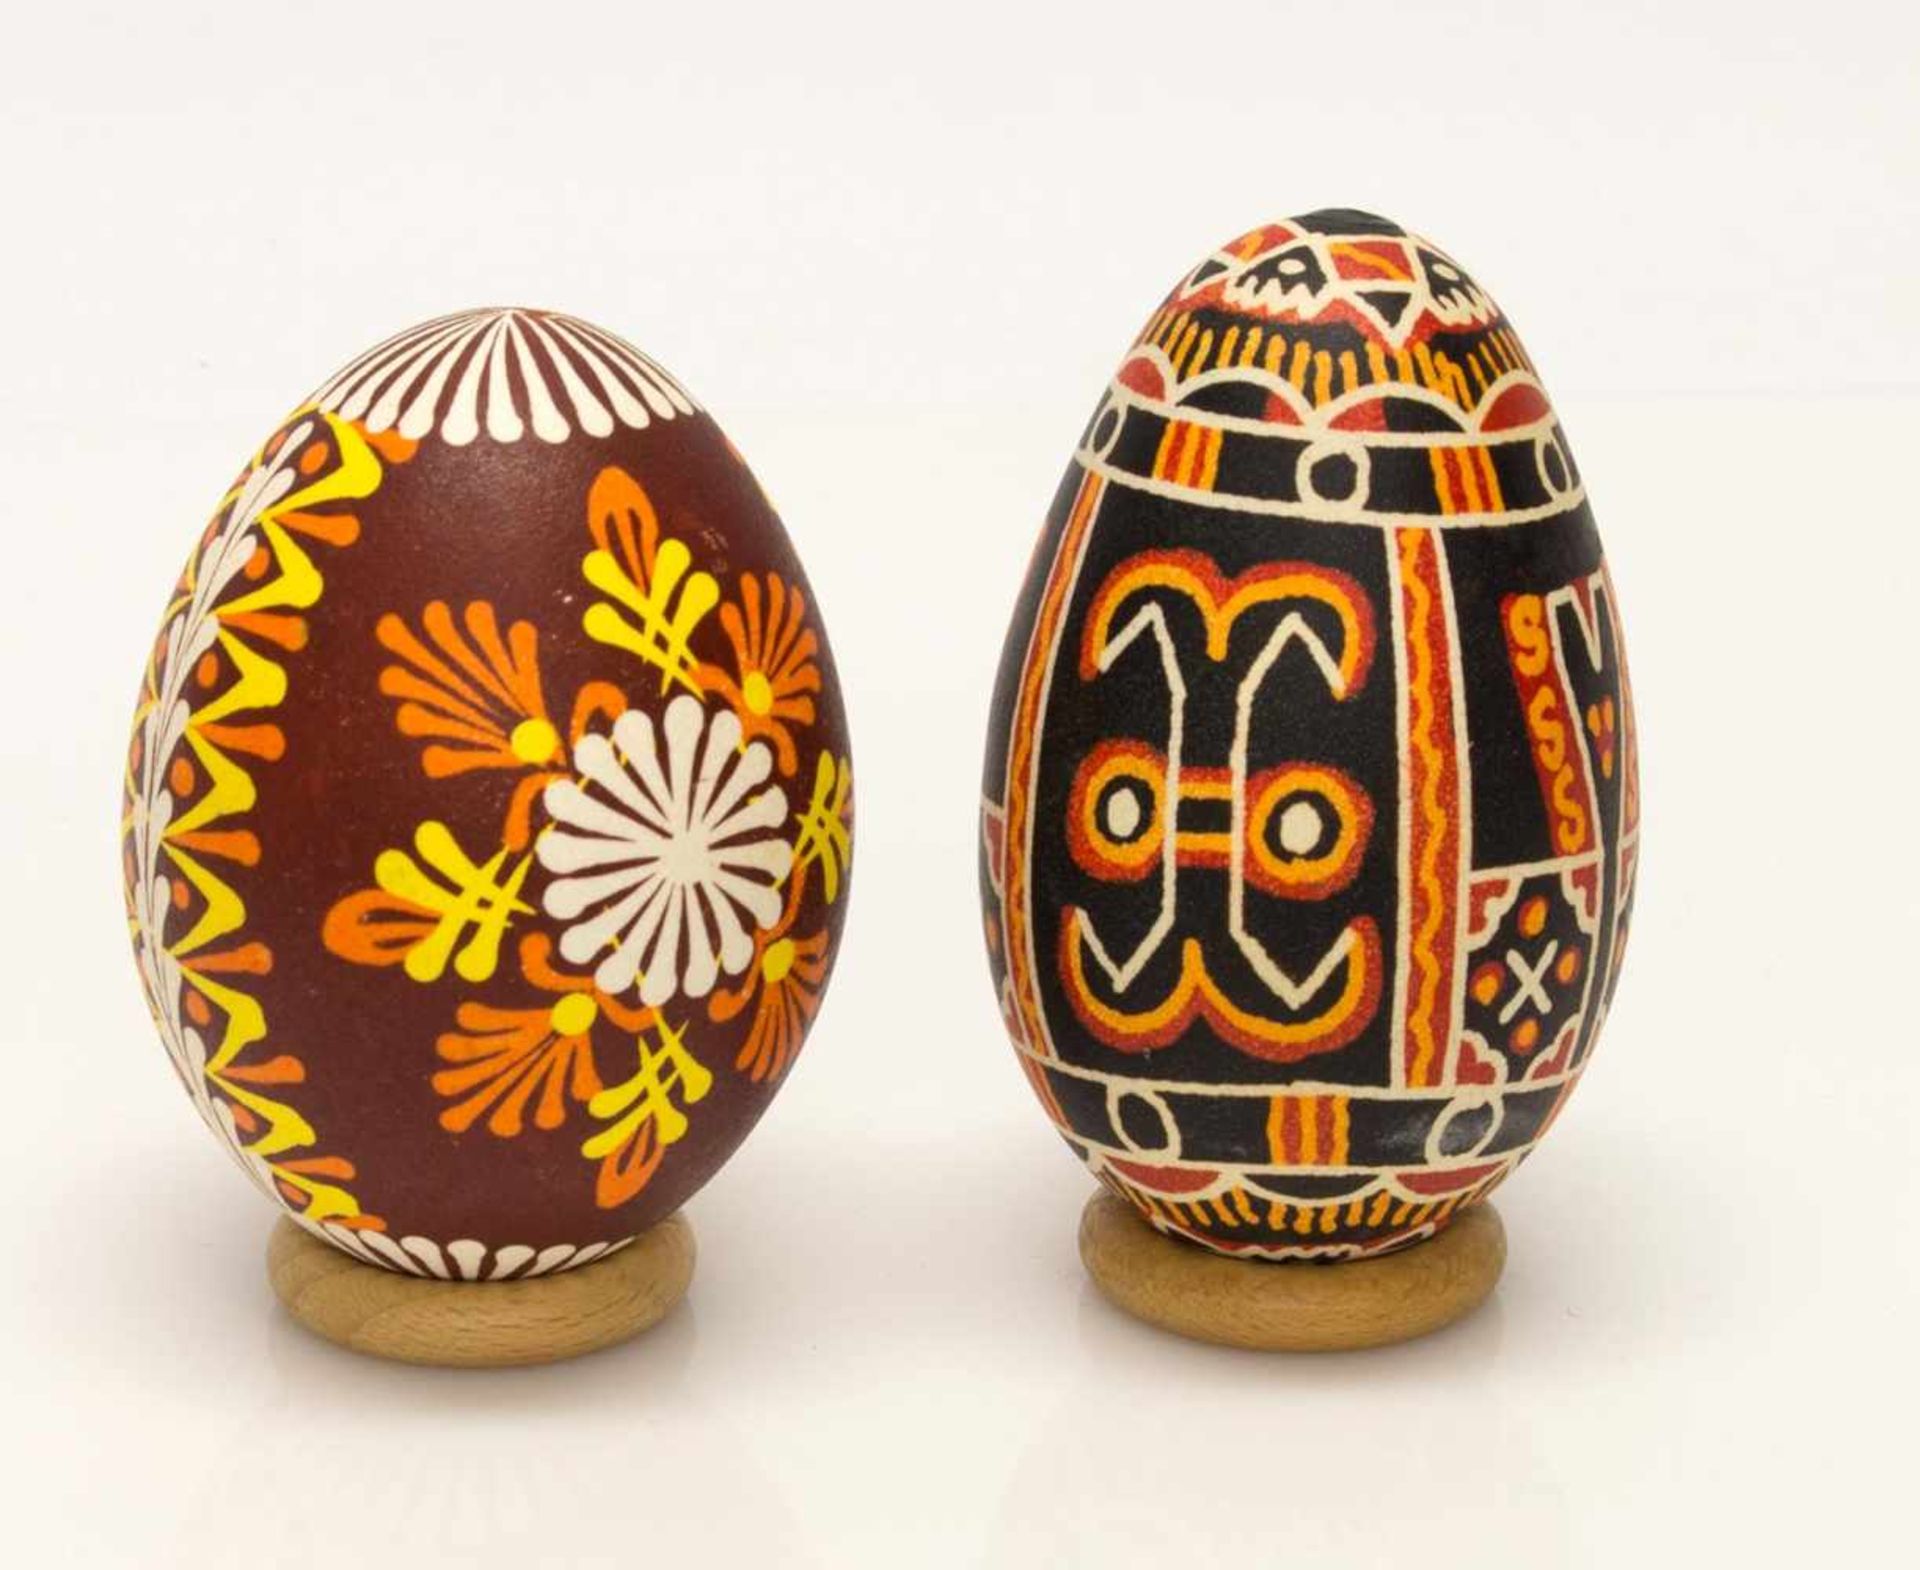 Lot Ostereier2 handverzierte Eier nach traditionell ukrainischer „Pysanka“-Art, farbenfrohe